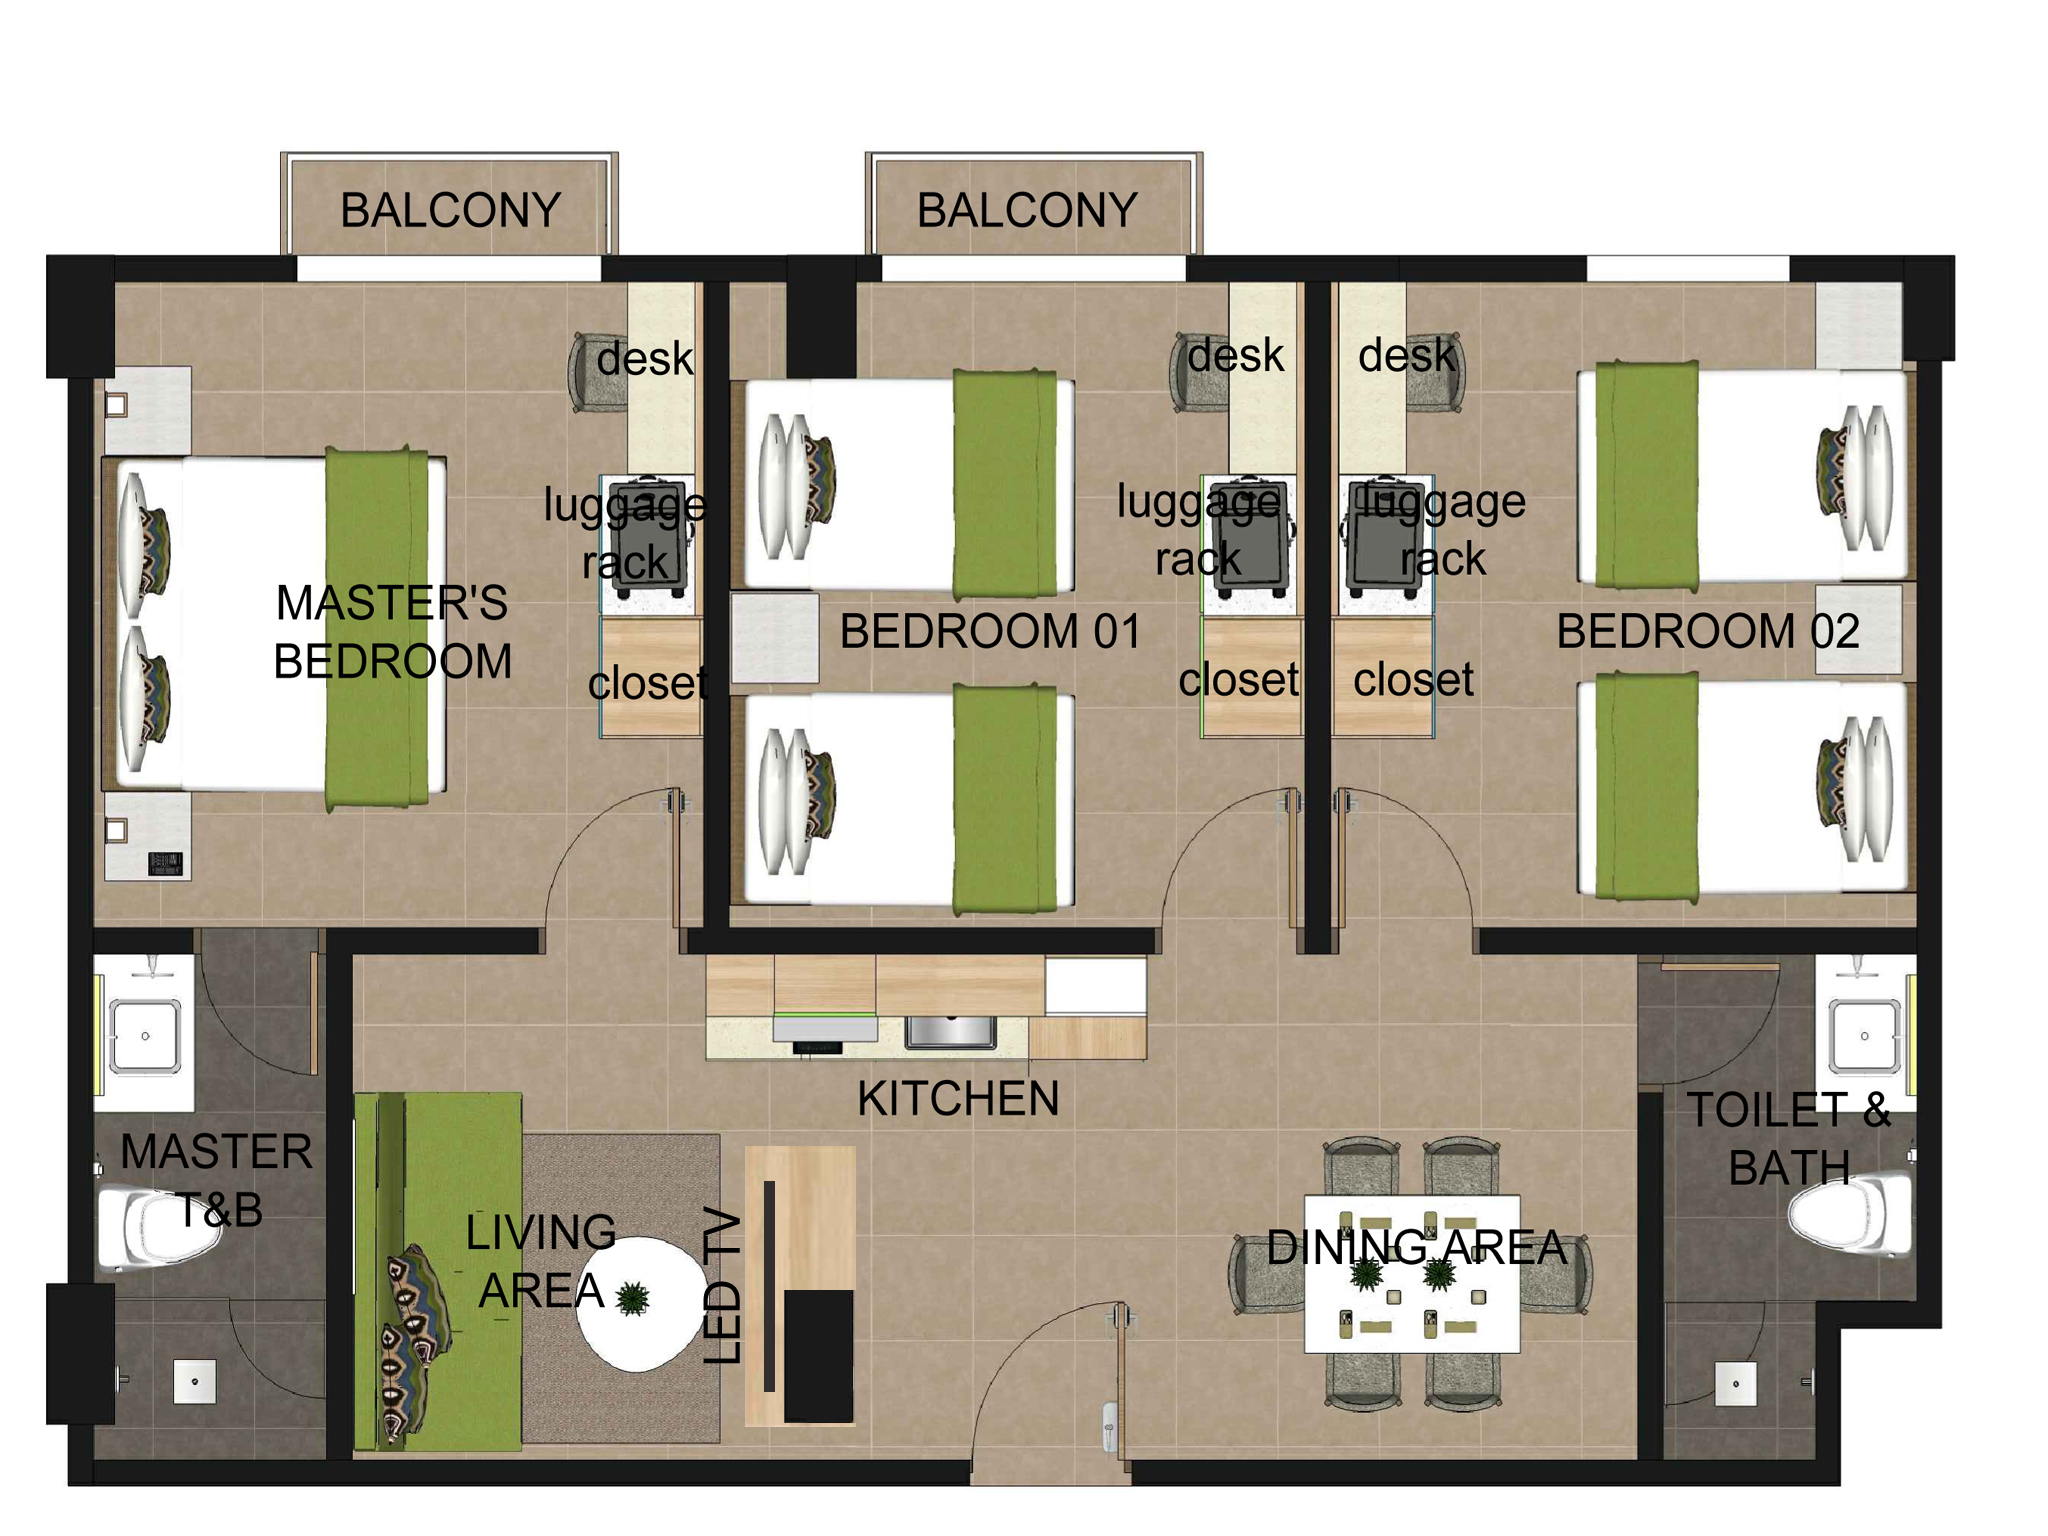 room plan design